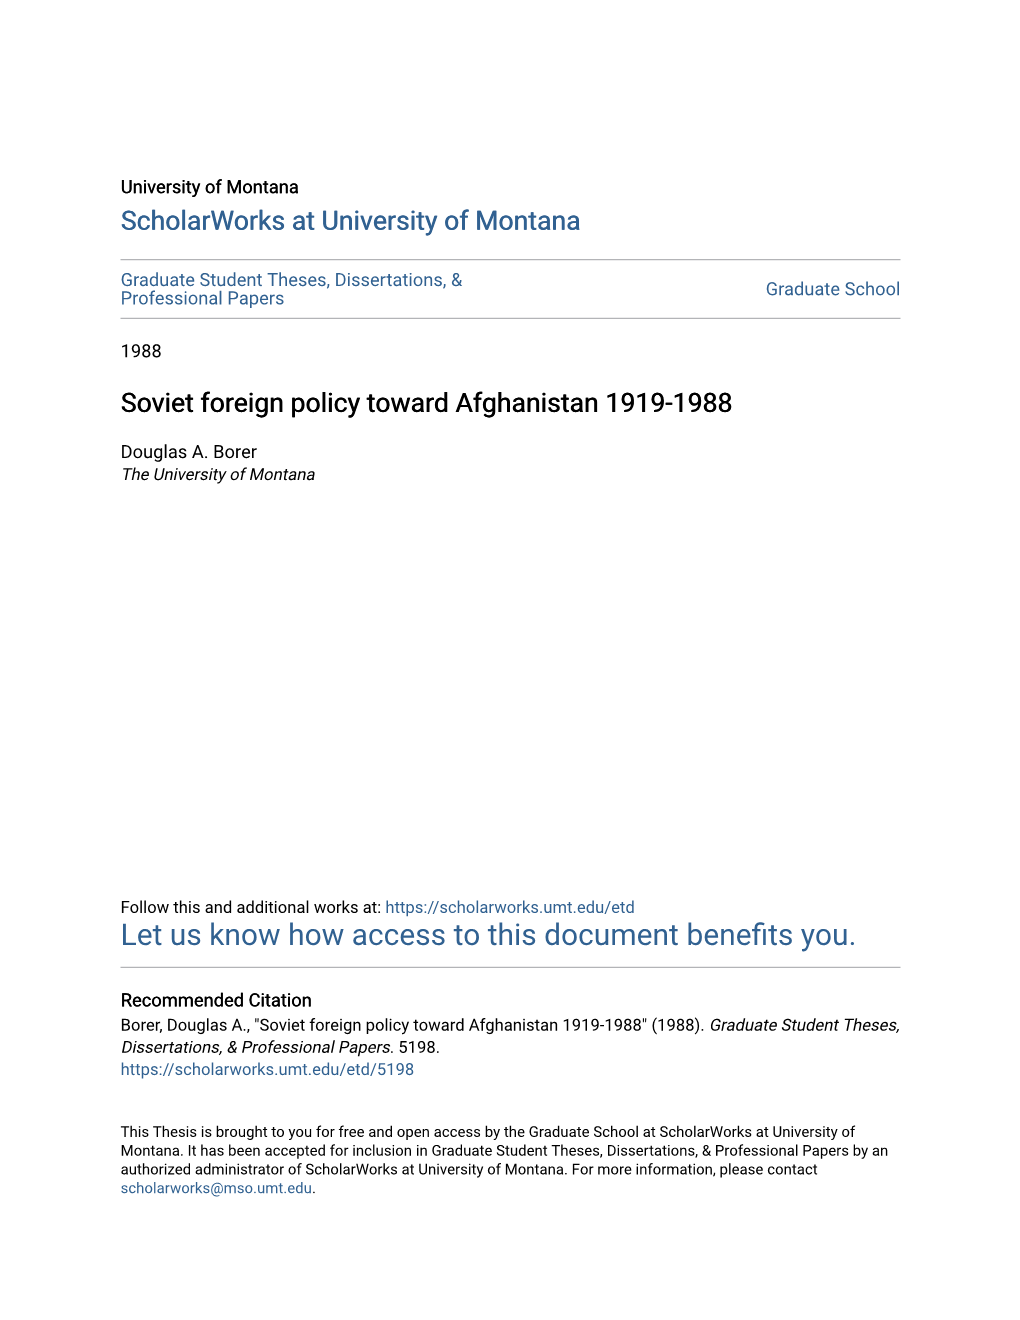 Soviet Foreign Policy Toward Afghanistan 1919-1988